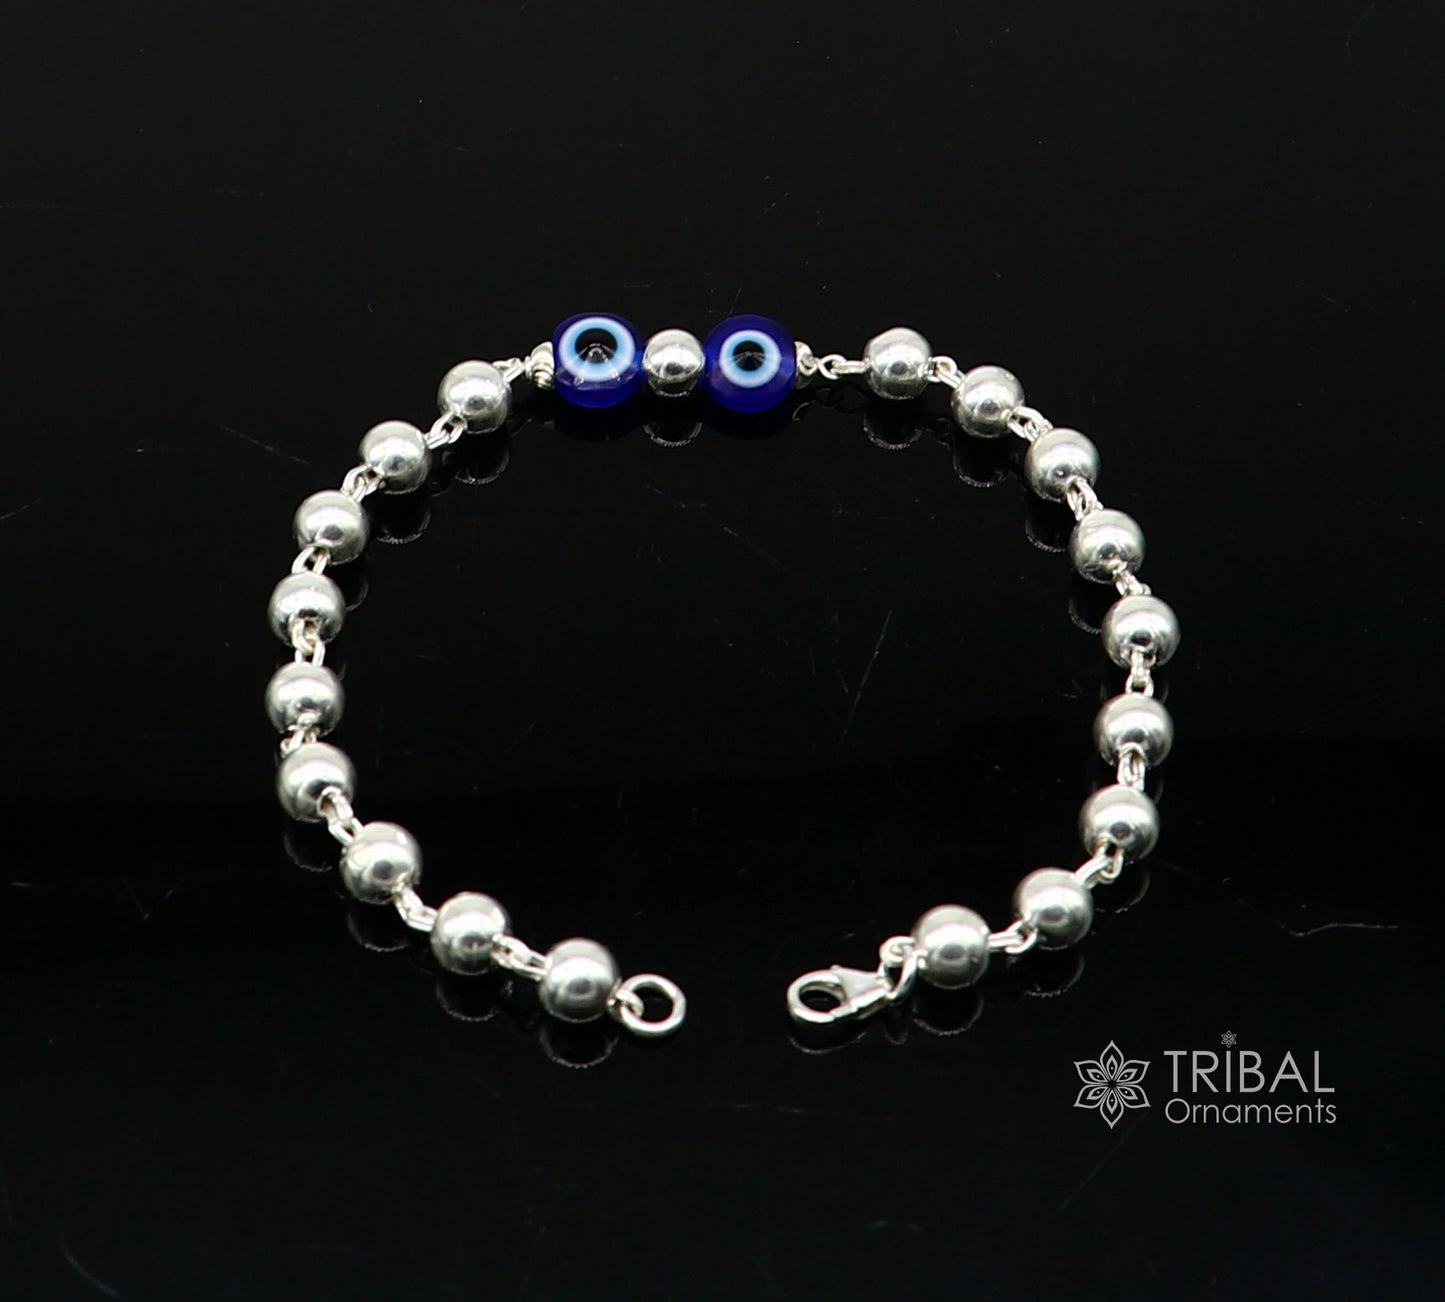 925 sterling silver handmade silver beaded evil eye bracelet, amazing stylish unisex cultural trendy bracelet all sizes jewelry sbr465 - TRIBAL ORNAMENTS